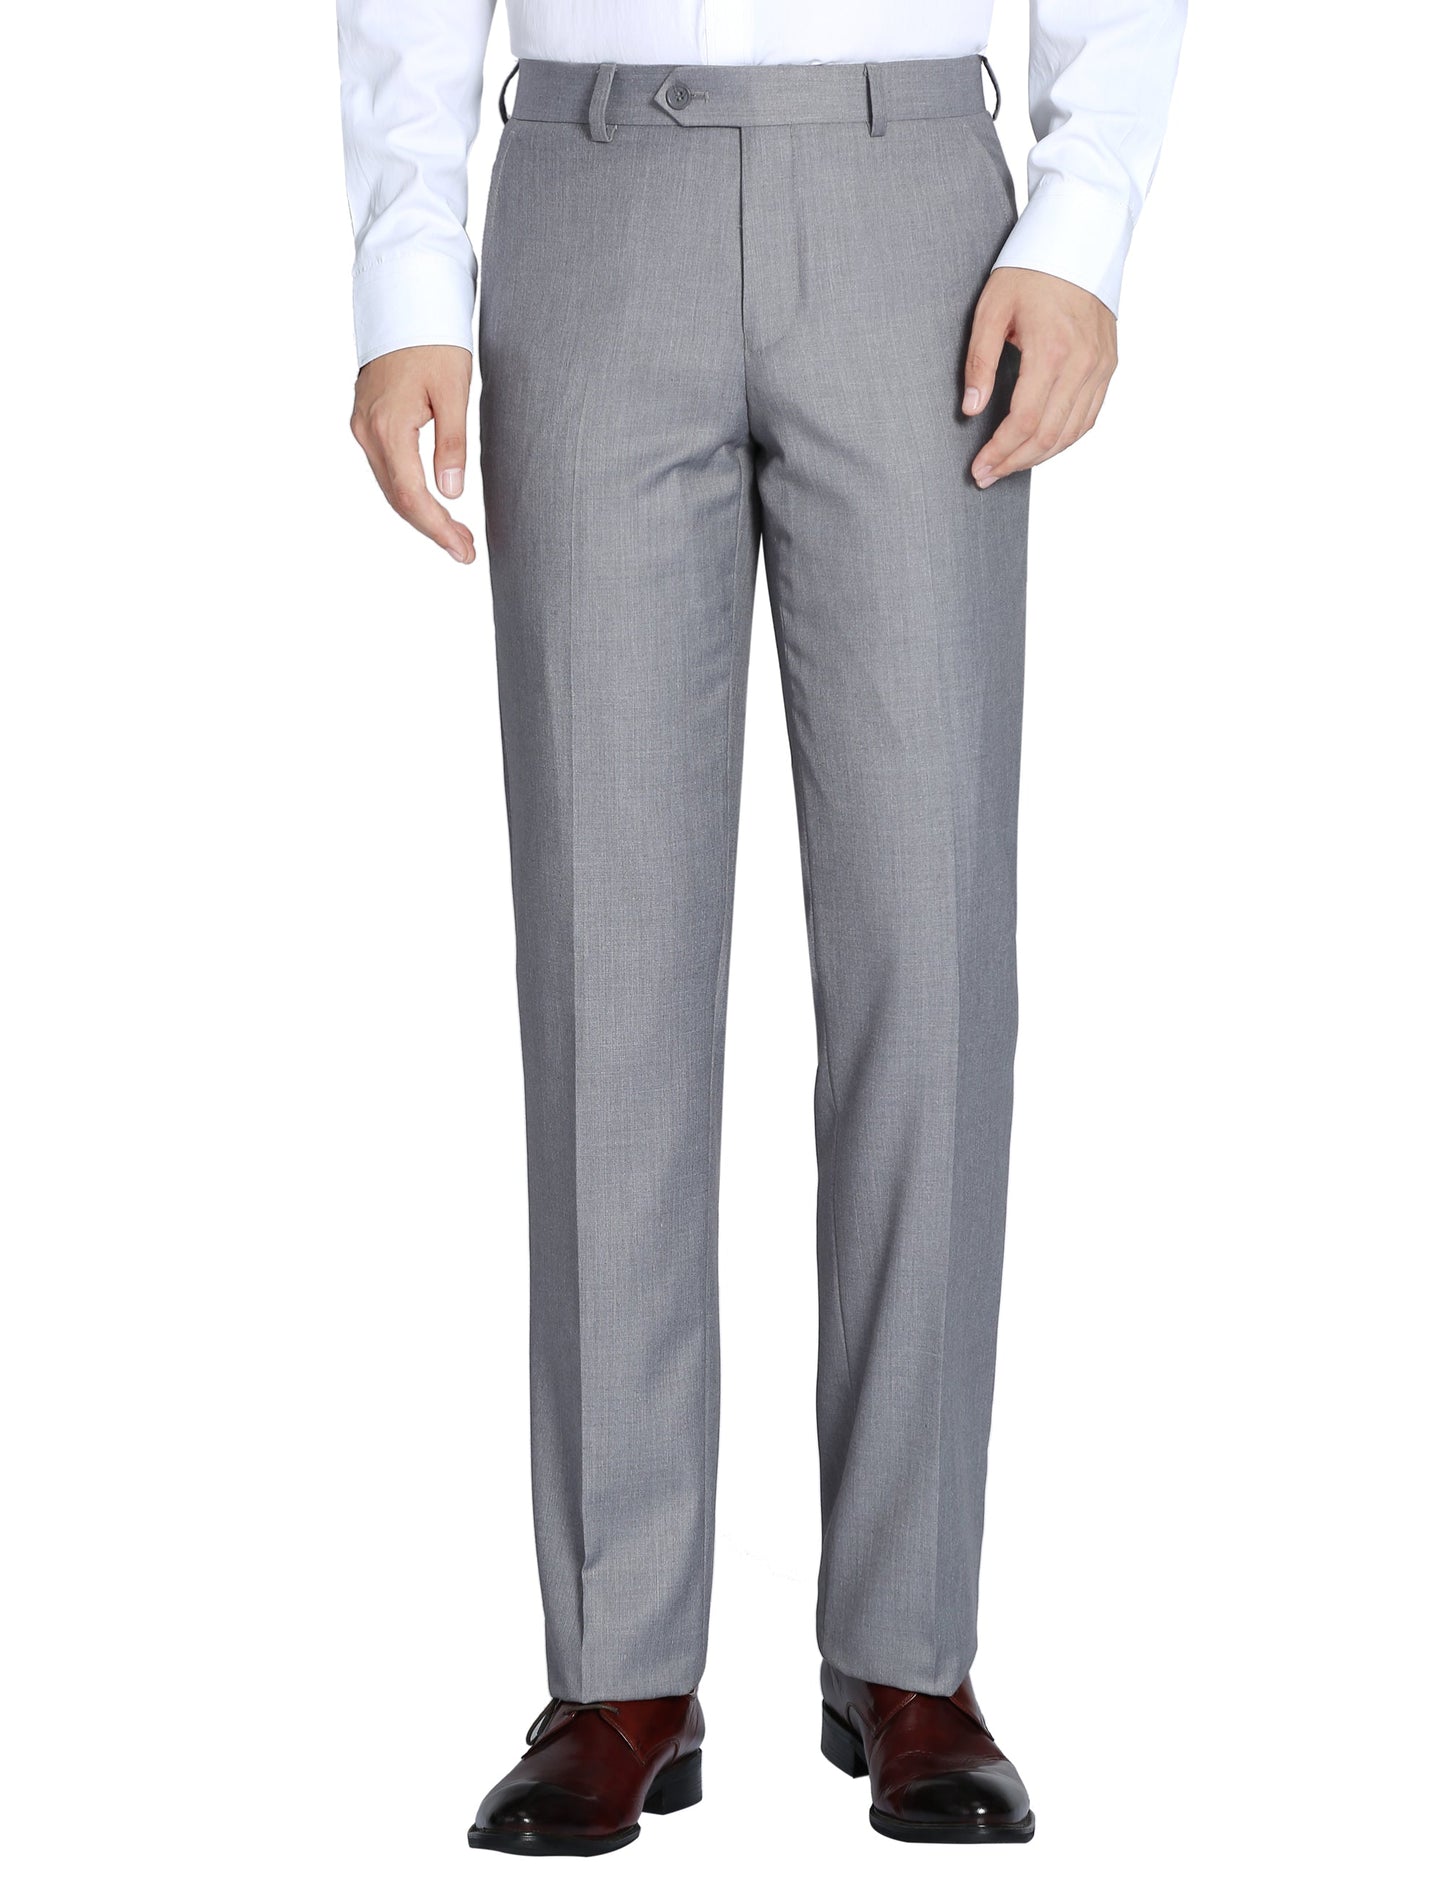 Men's Light Grey Slim Fit Dress Pants